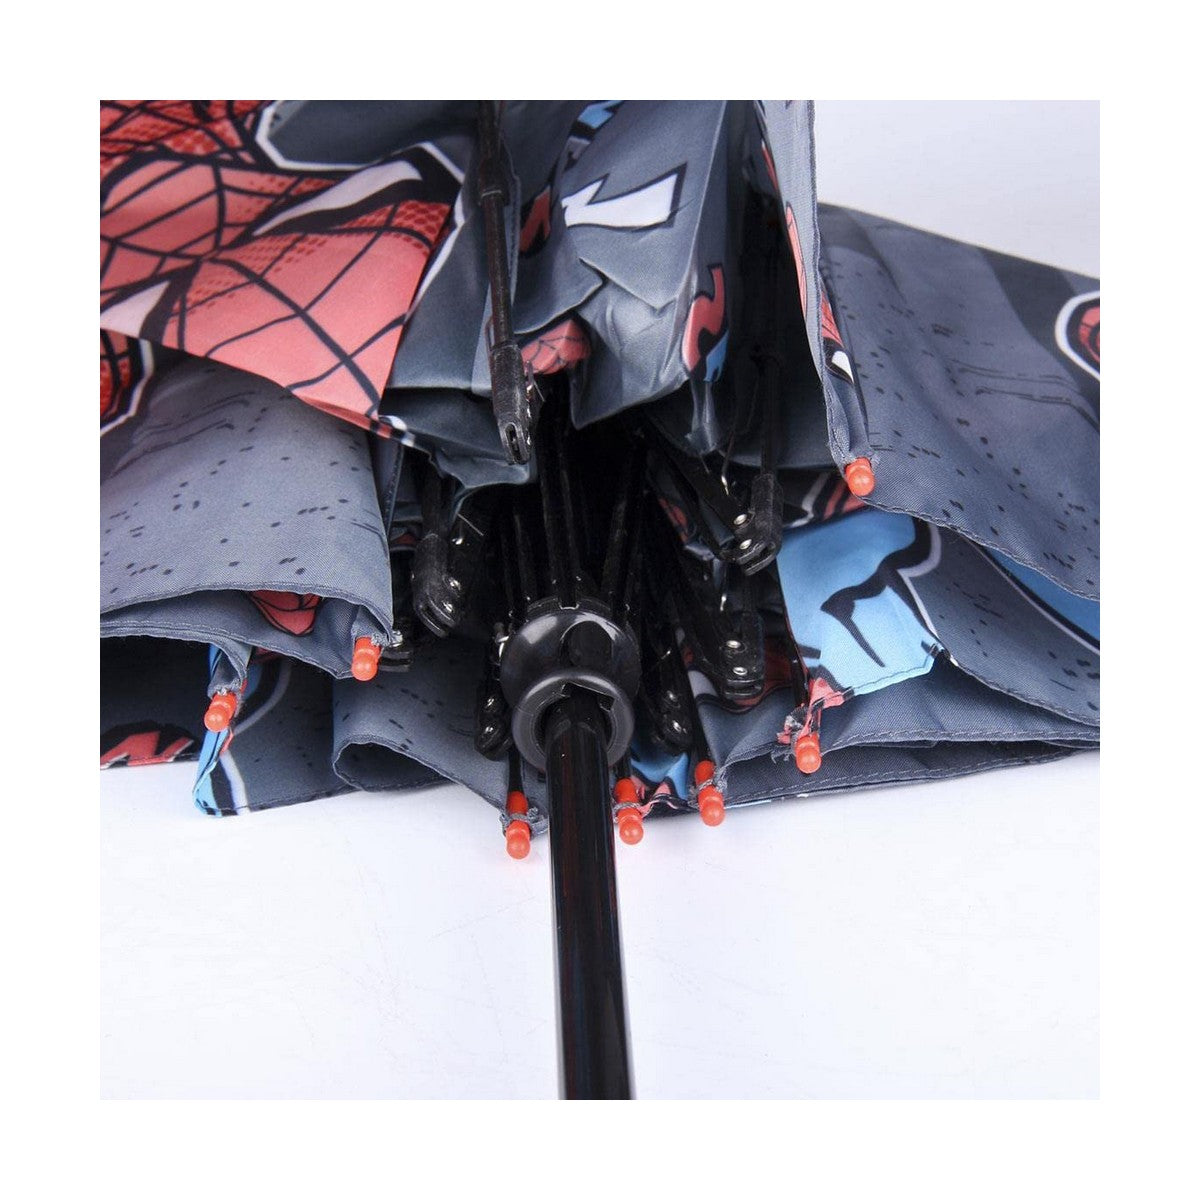 Opvouwbare Paraplu Spiderman Grijs (Ø 92 cm)